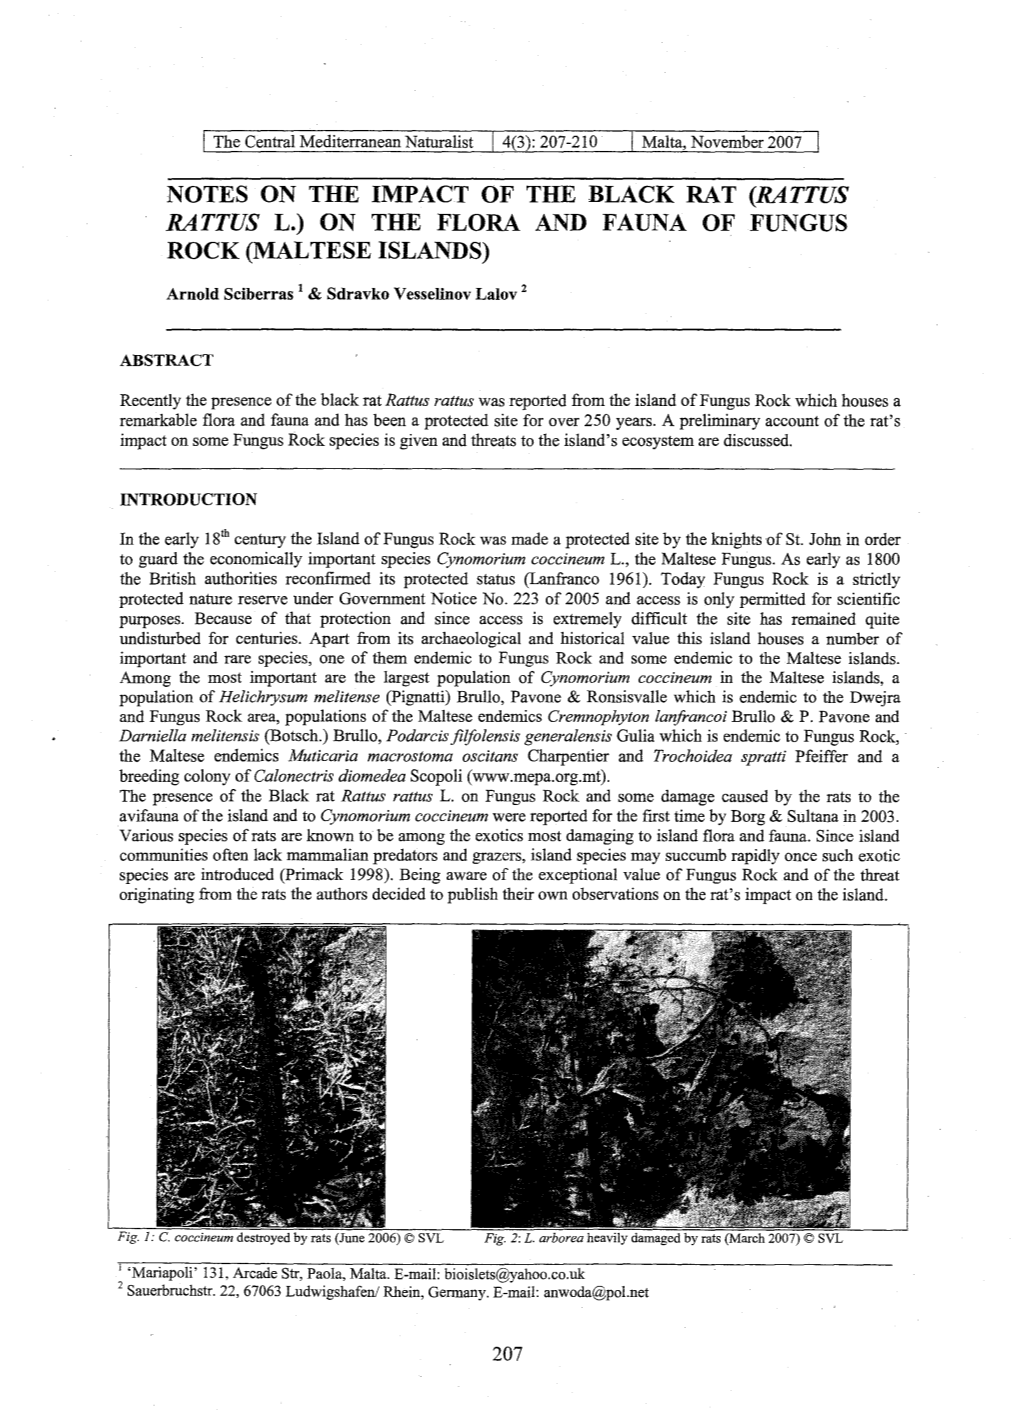 Rattus Rattus L.) on the Flora and Fauna of Fungus Rock (Maltese Islands